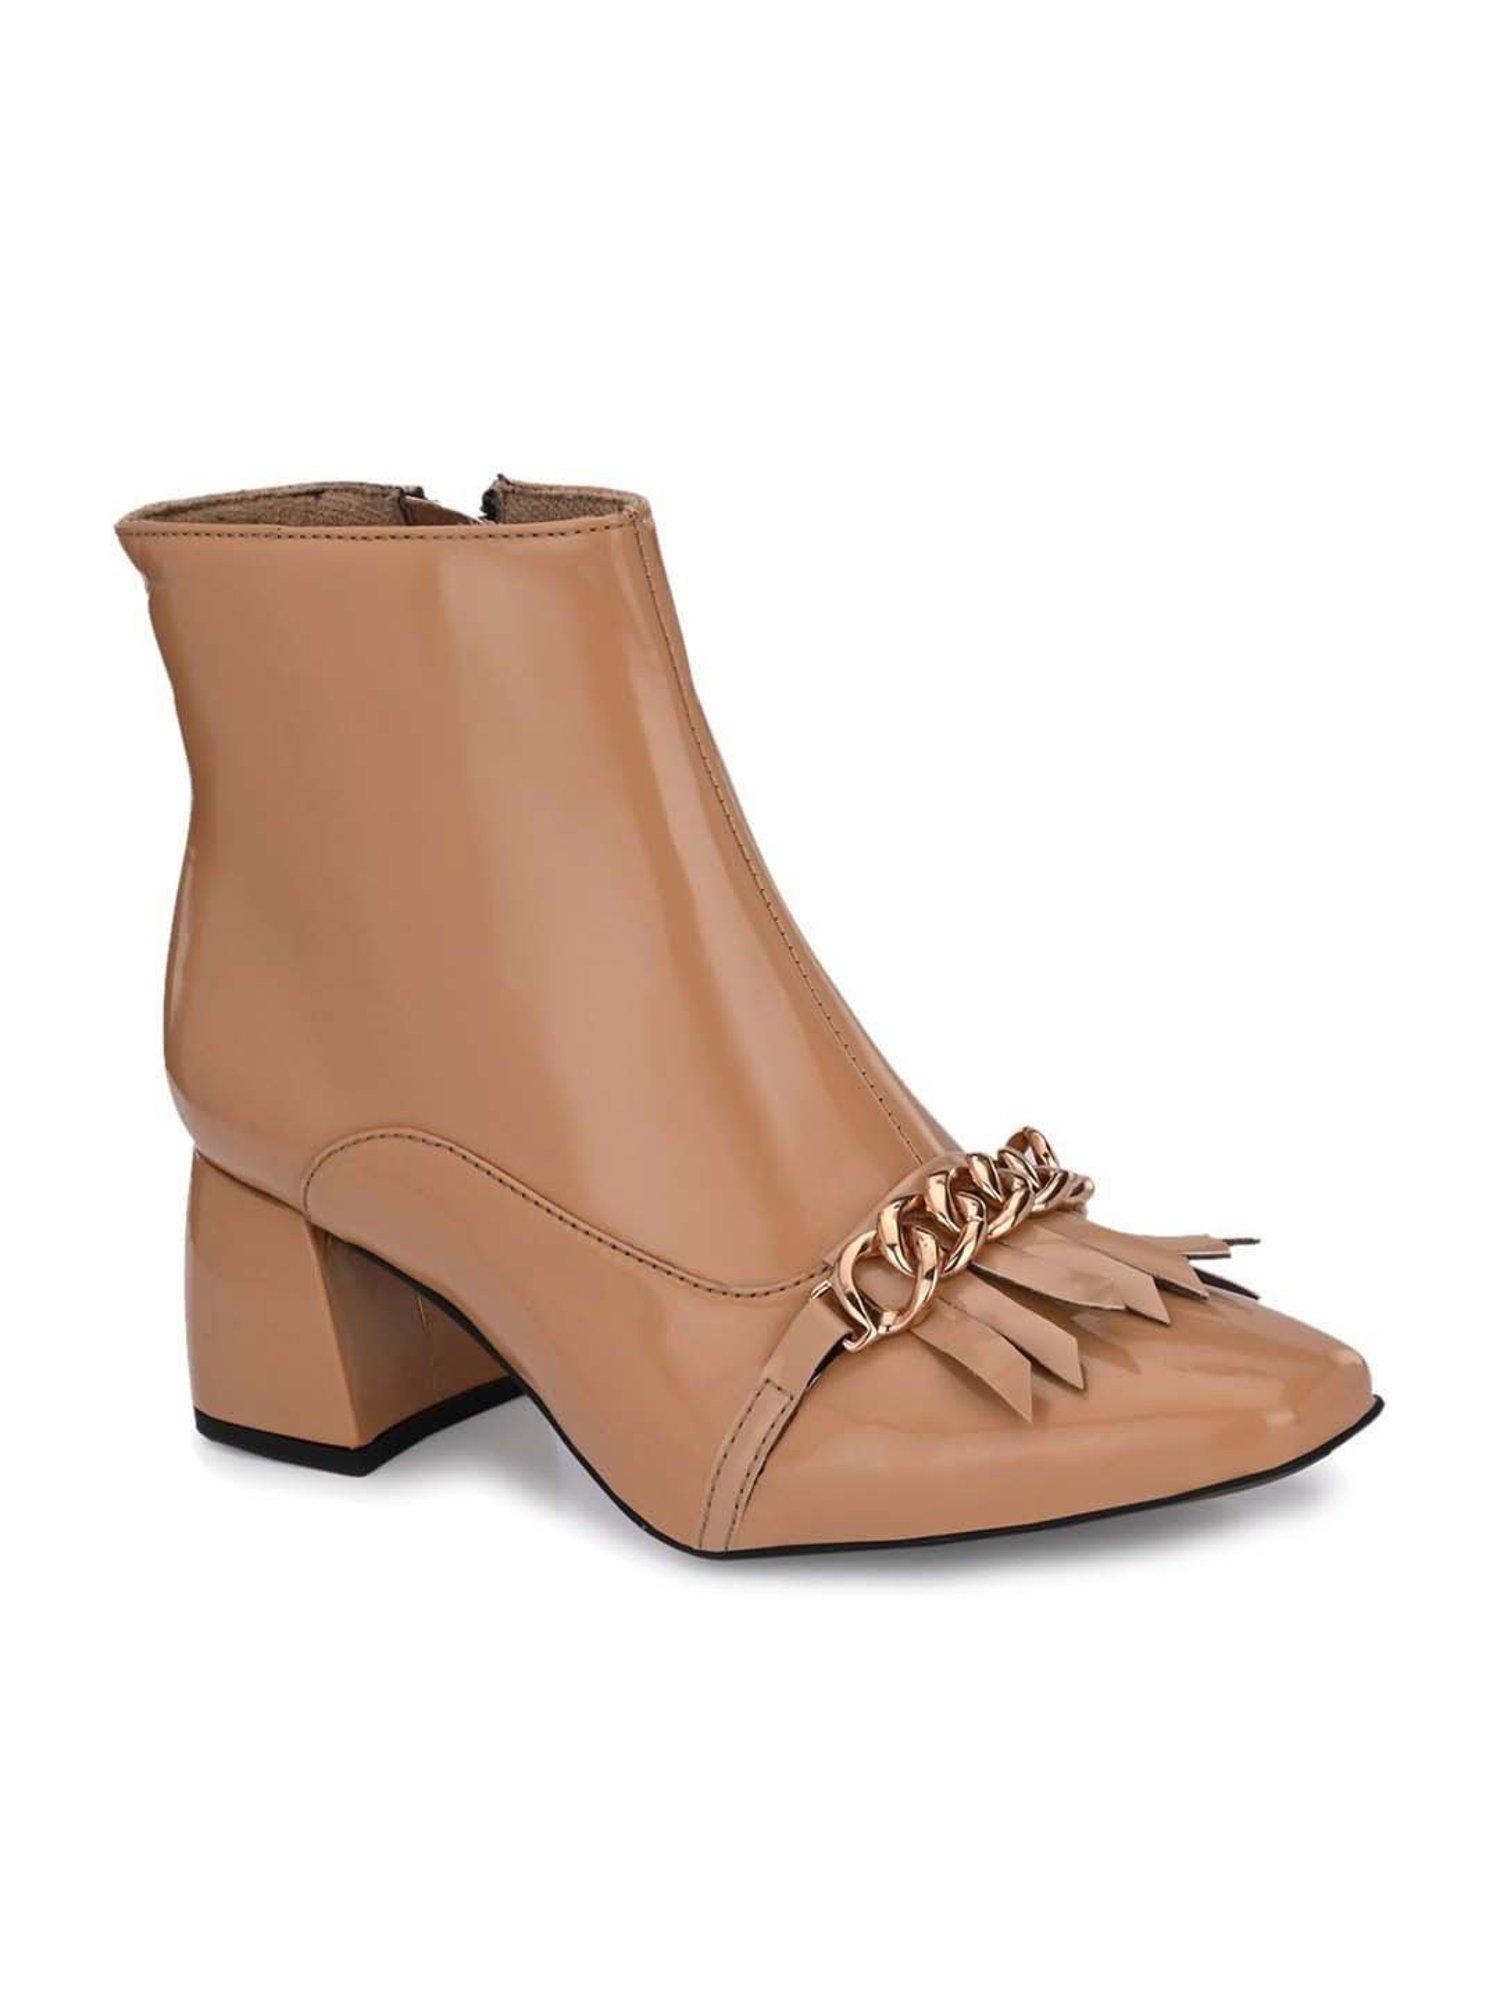 Block-heeled ankle boots - Beige - Ladies | H&M SG